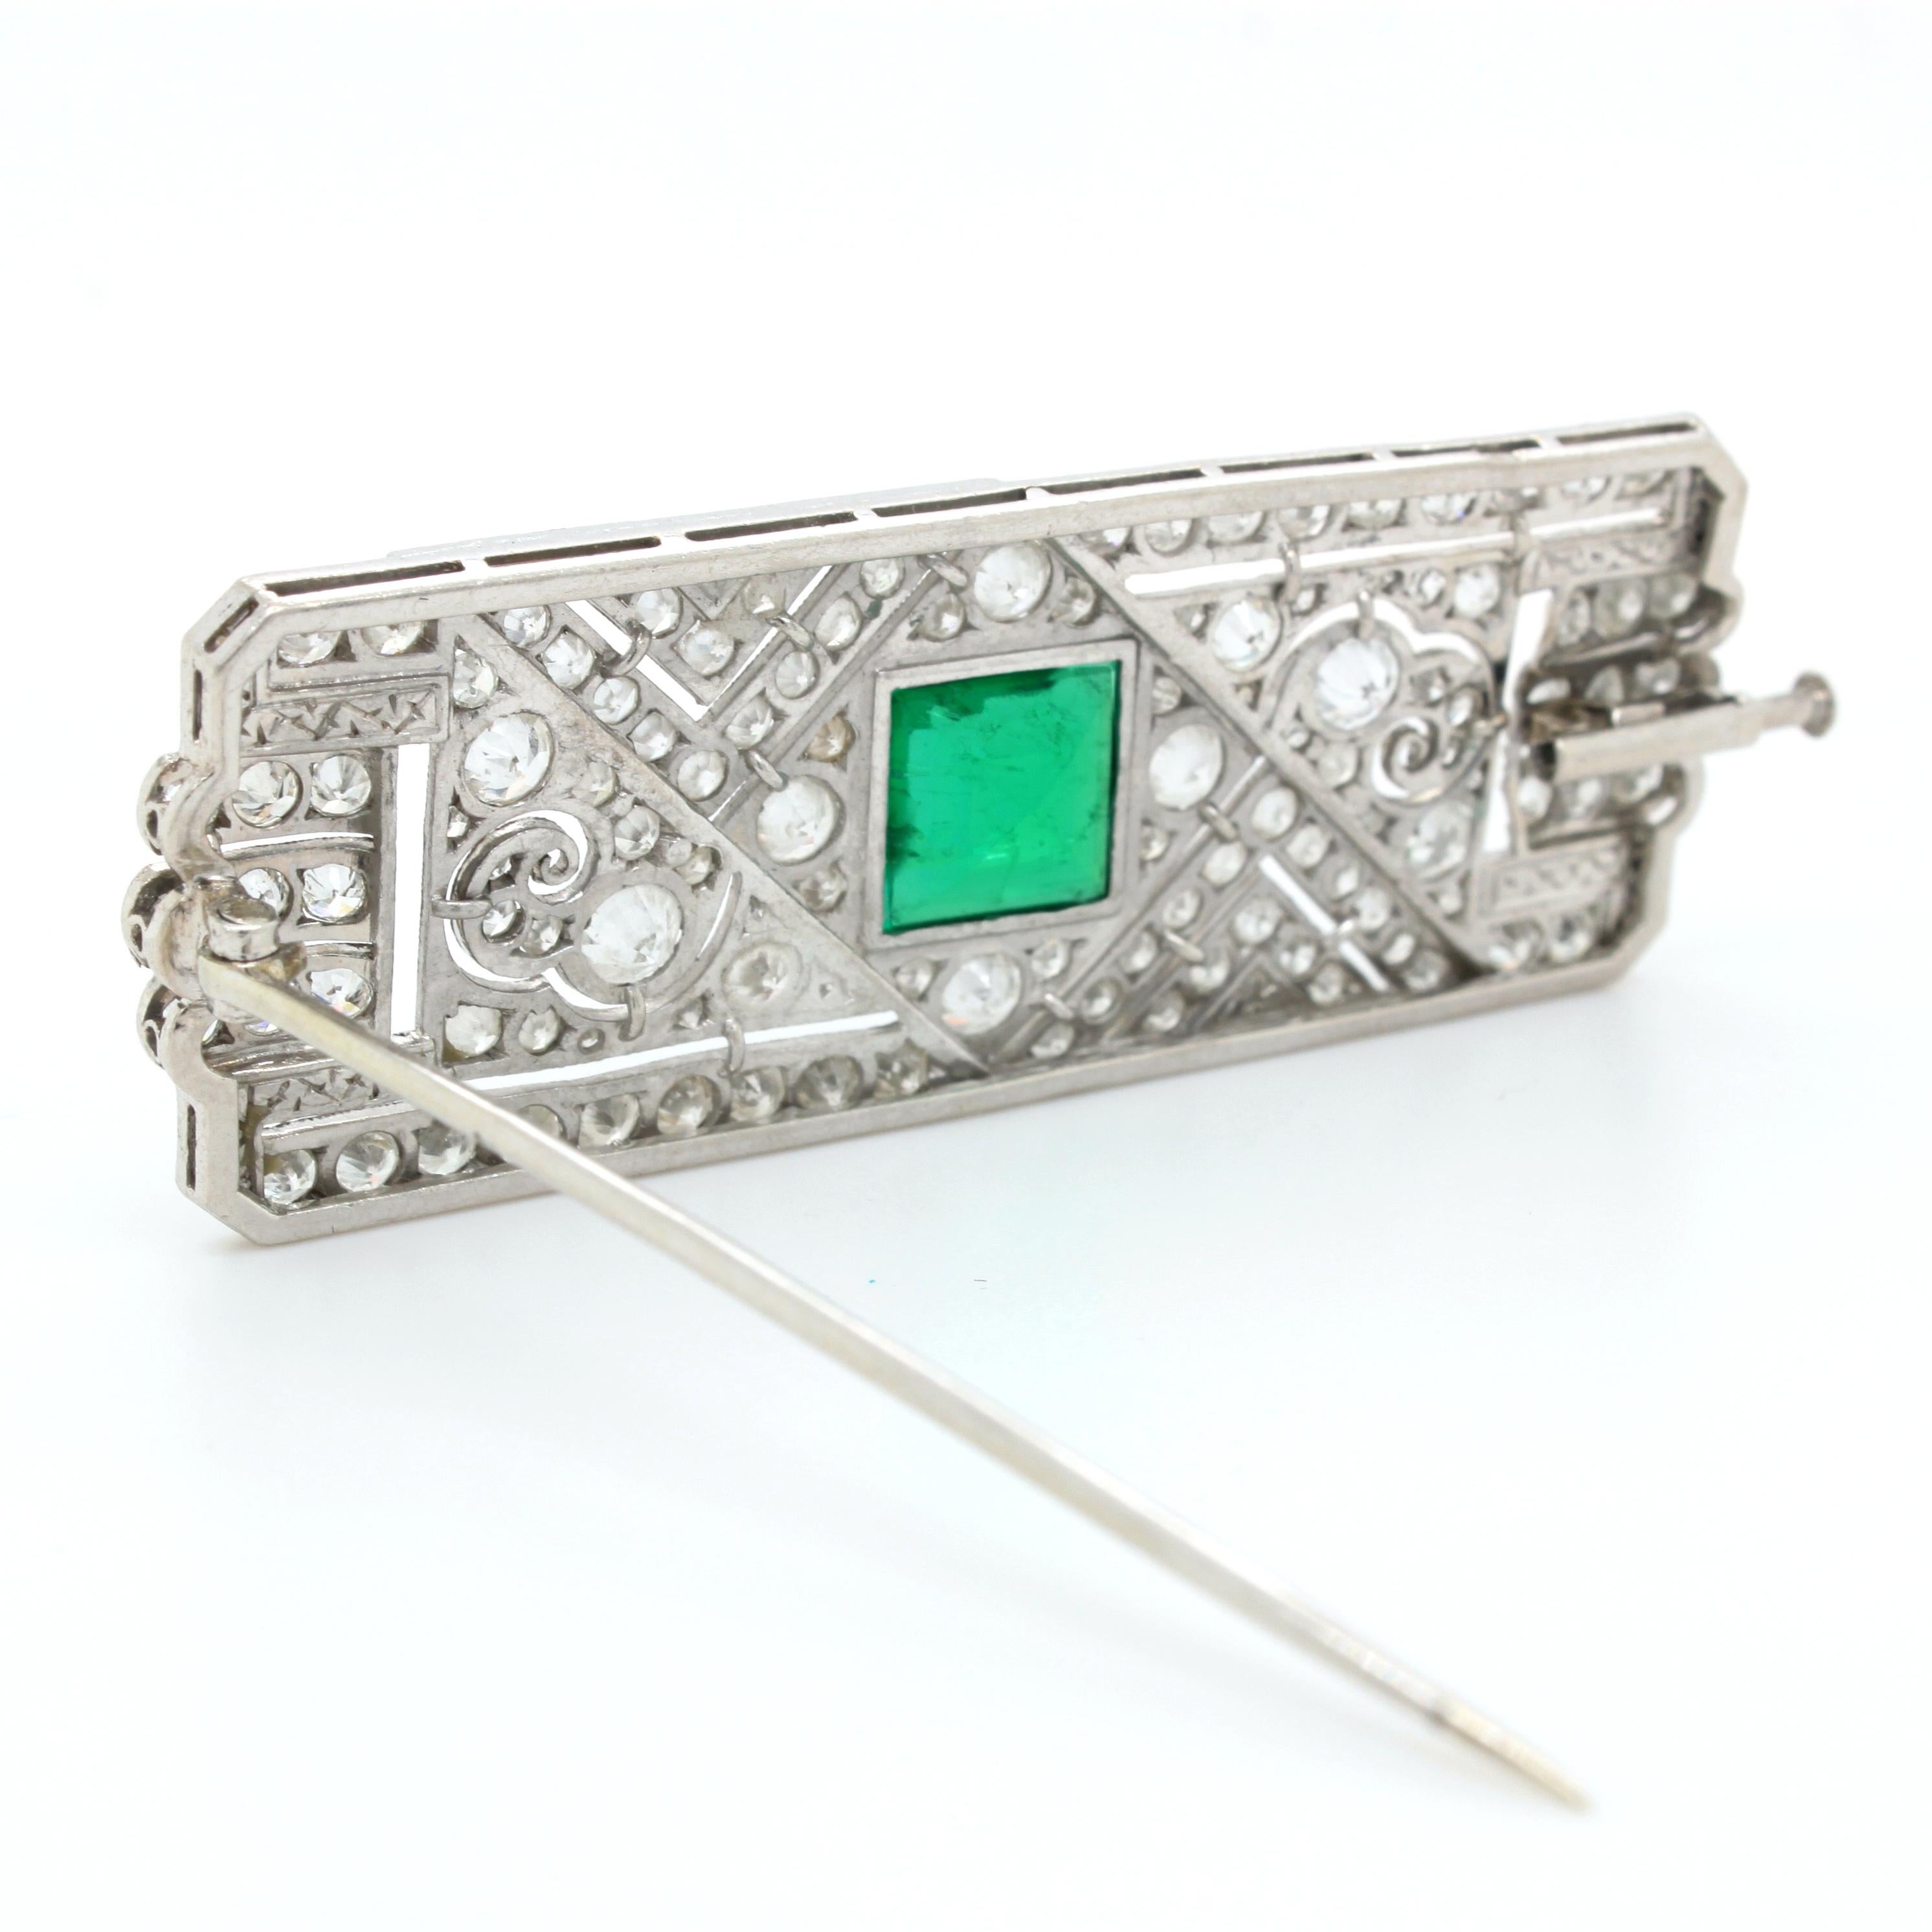 Columbian Emerald, Diamond and Onyx Art Deco Brooch, ca. 1920s For Sale 1